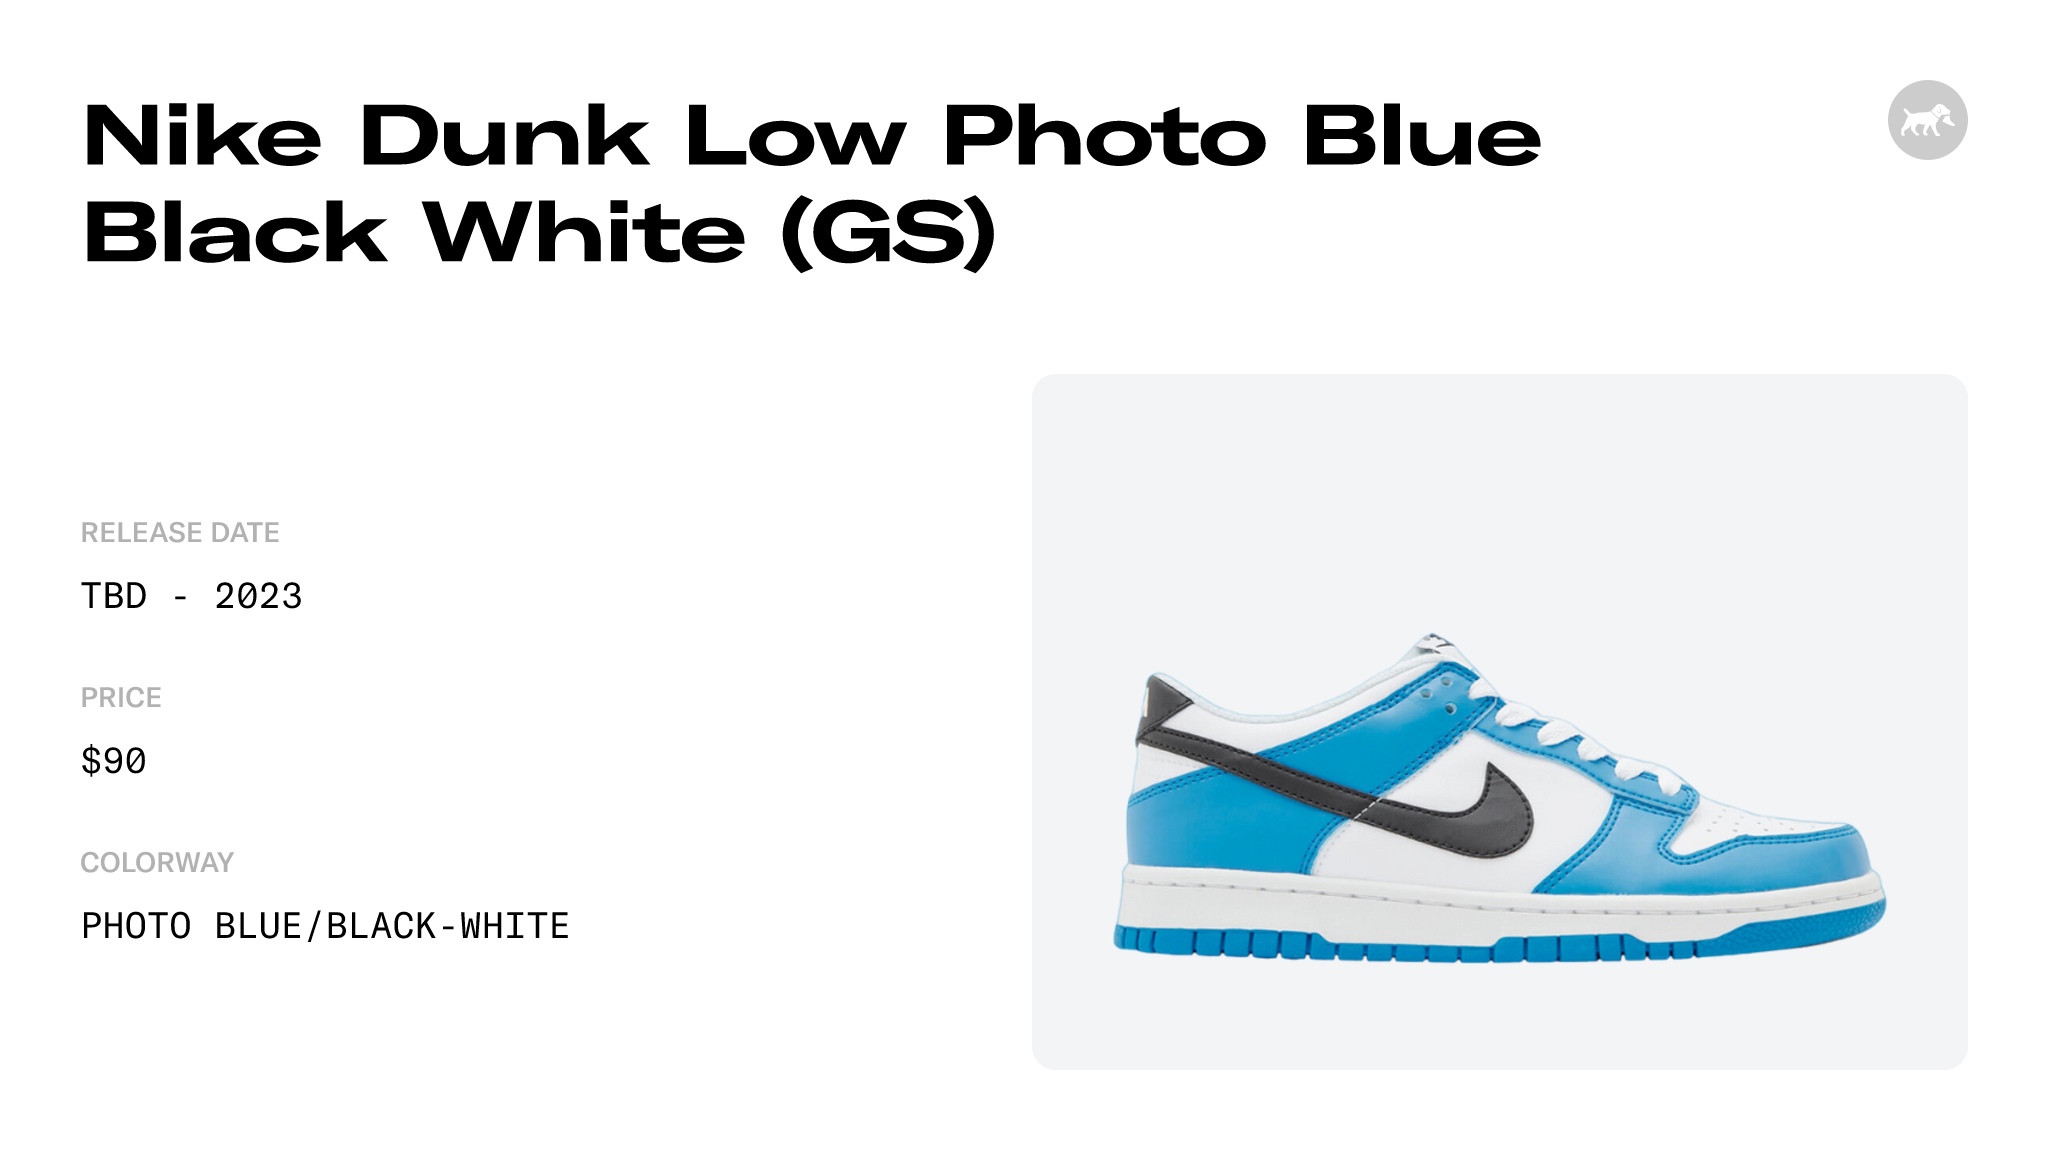 Nike Dunk Low GS Photo Blue Black White FV7021-400